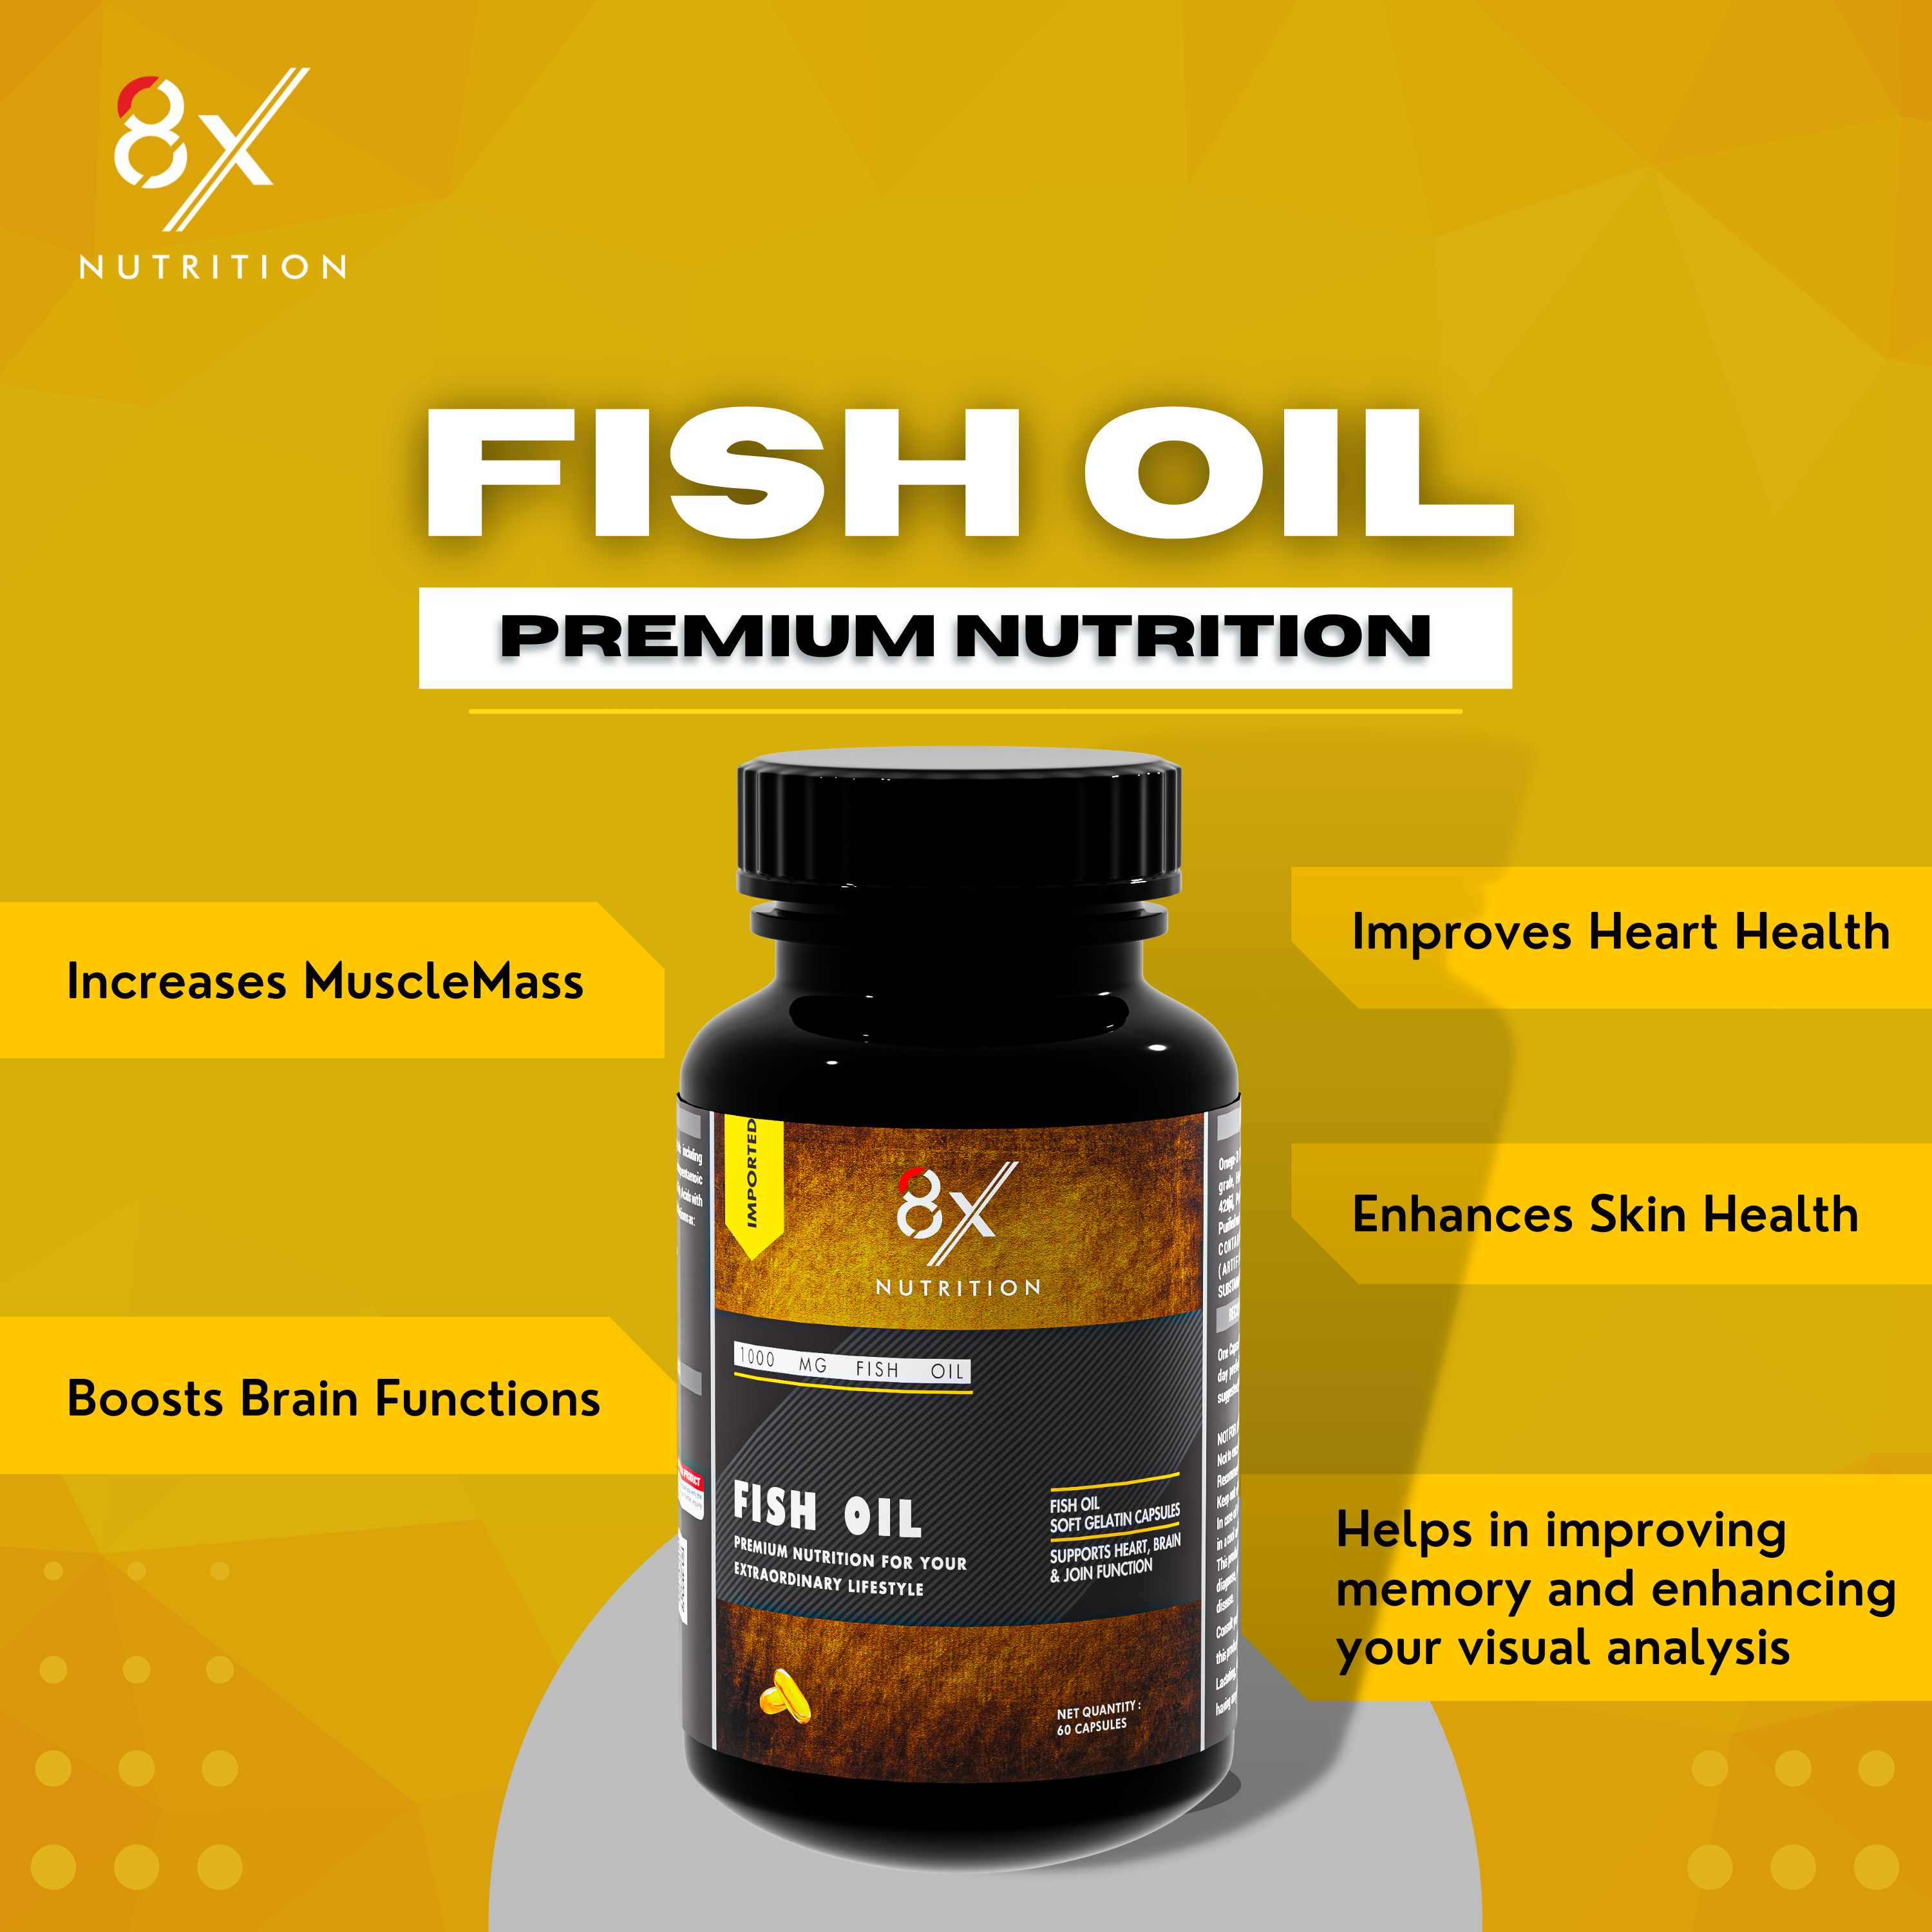 8X Nutrition Fish Oil